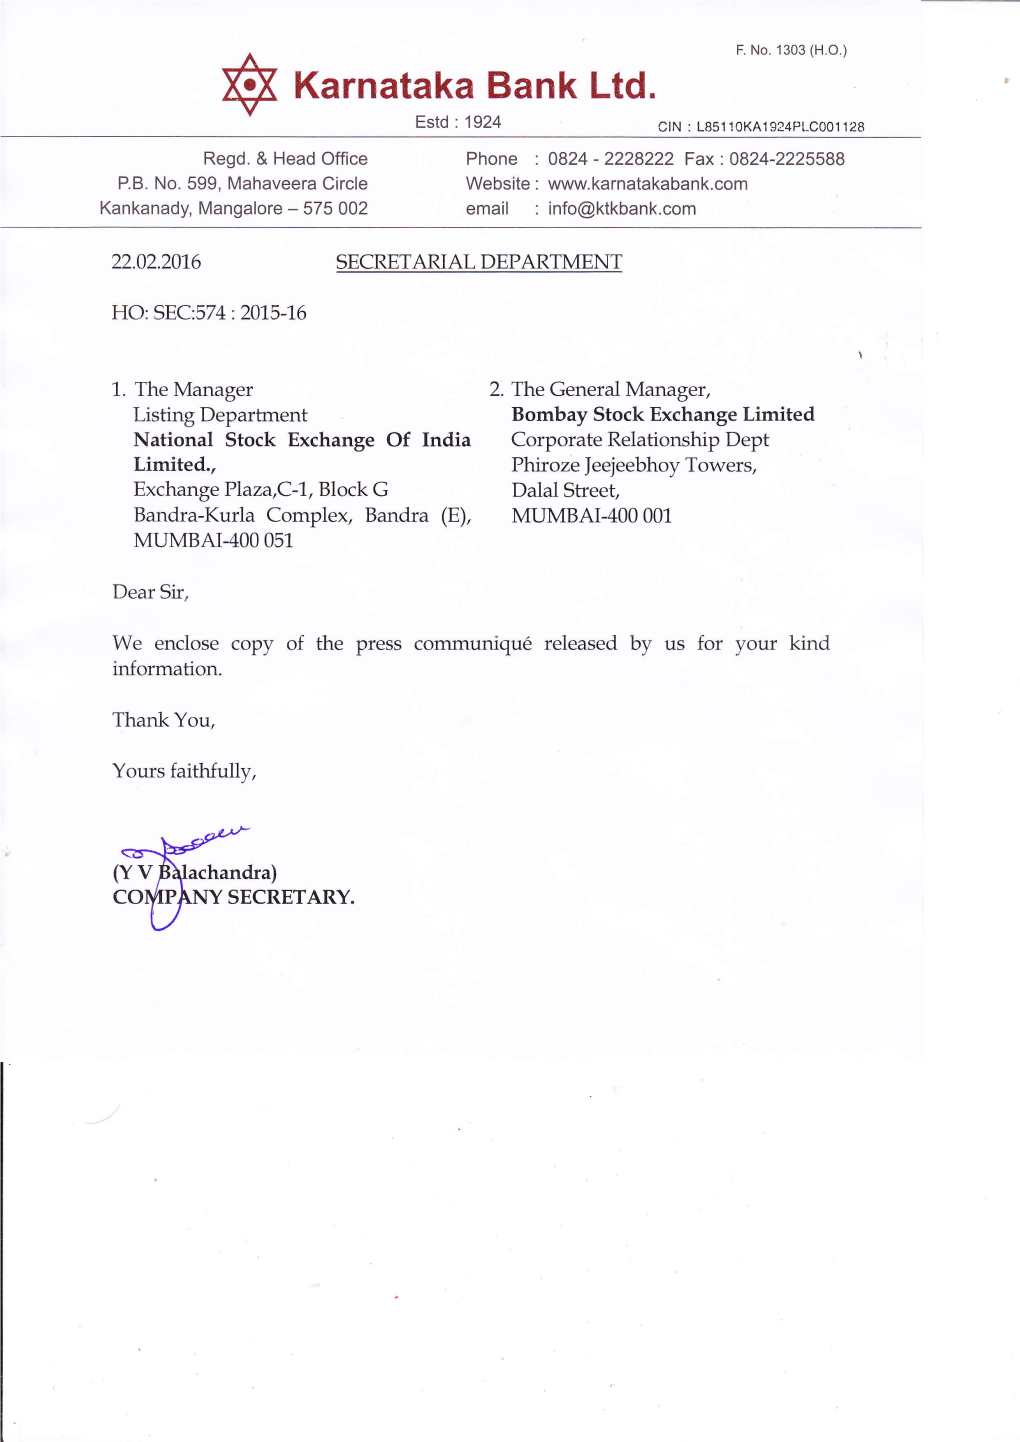 Appointment of Shri U R Bhat and Shri Keshav K Desai